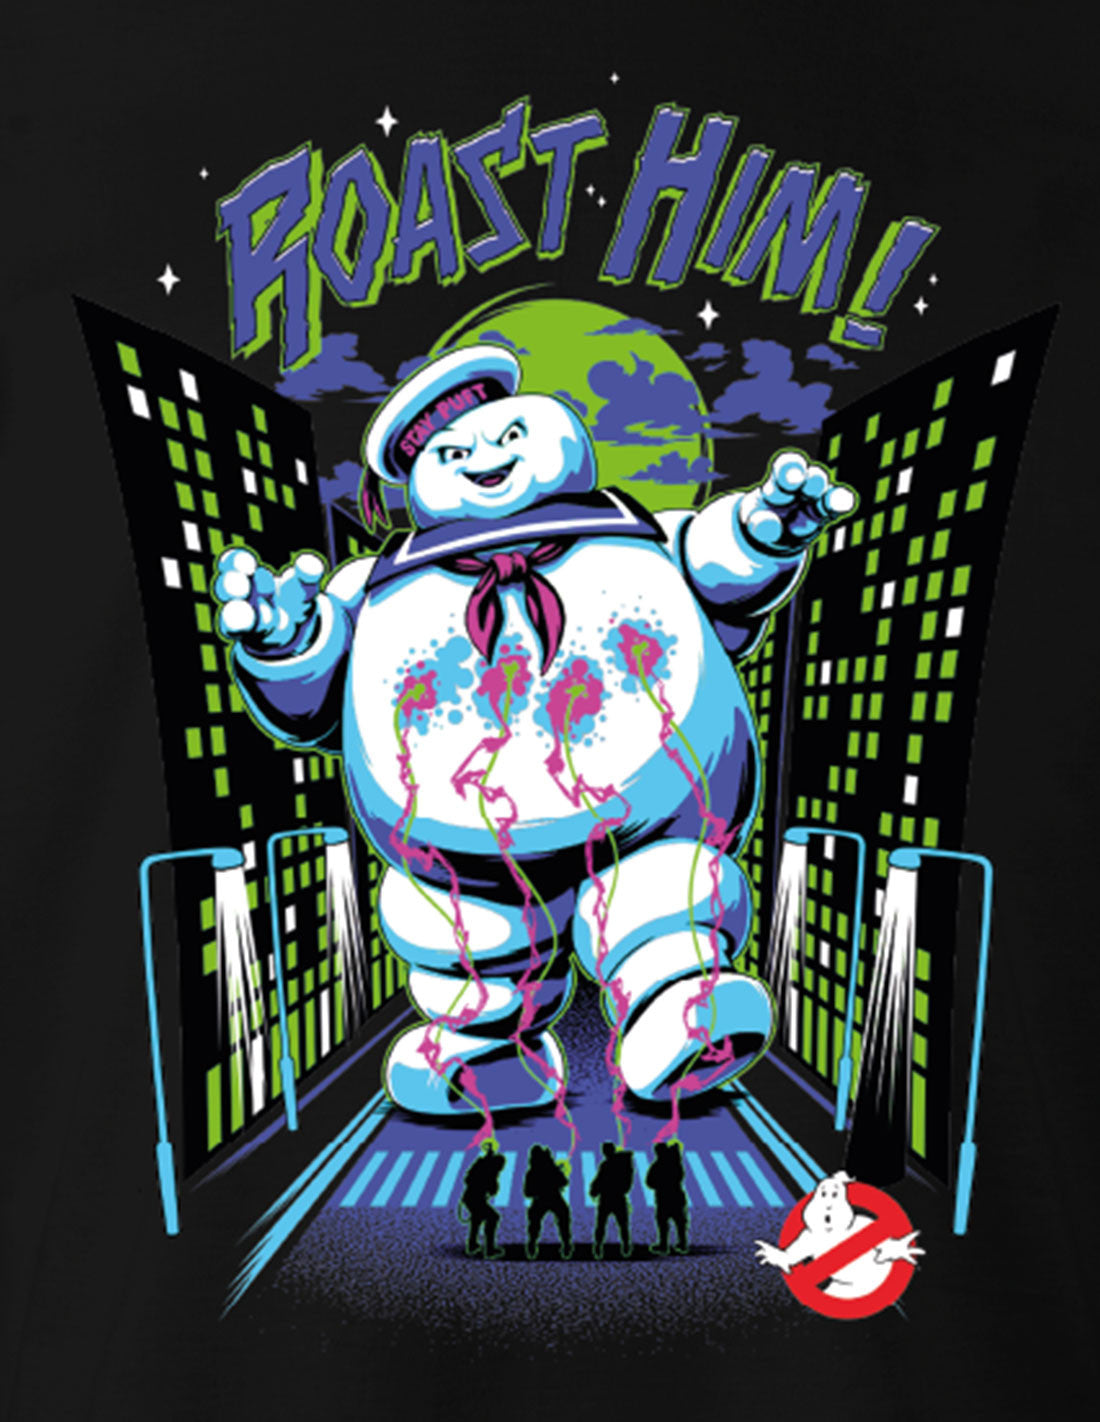 Ghostbusters t-shirt - Roast Him